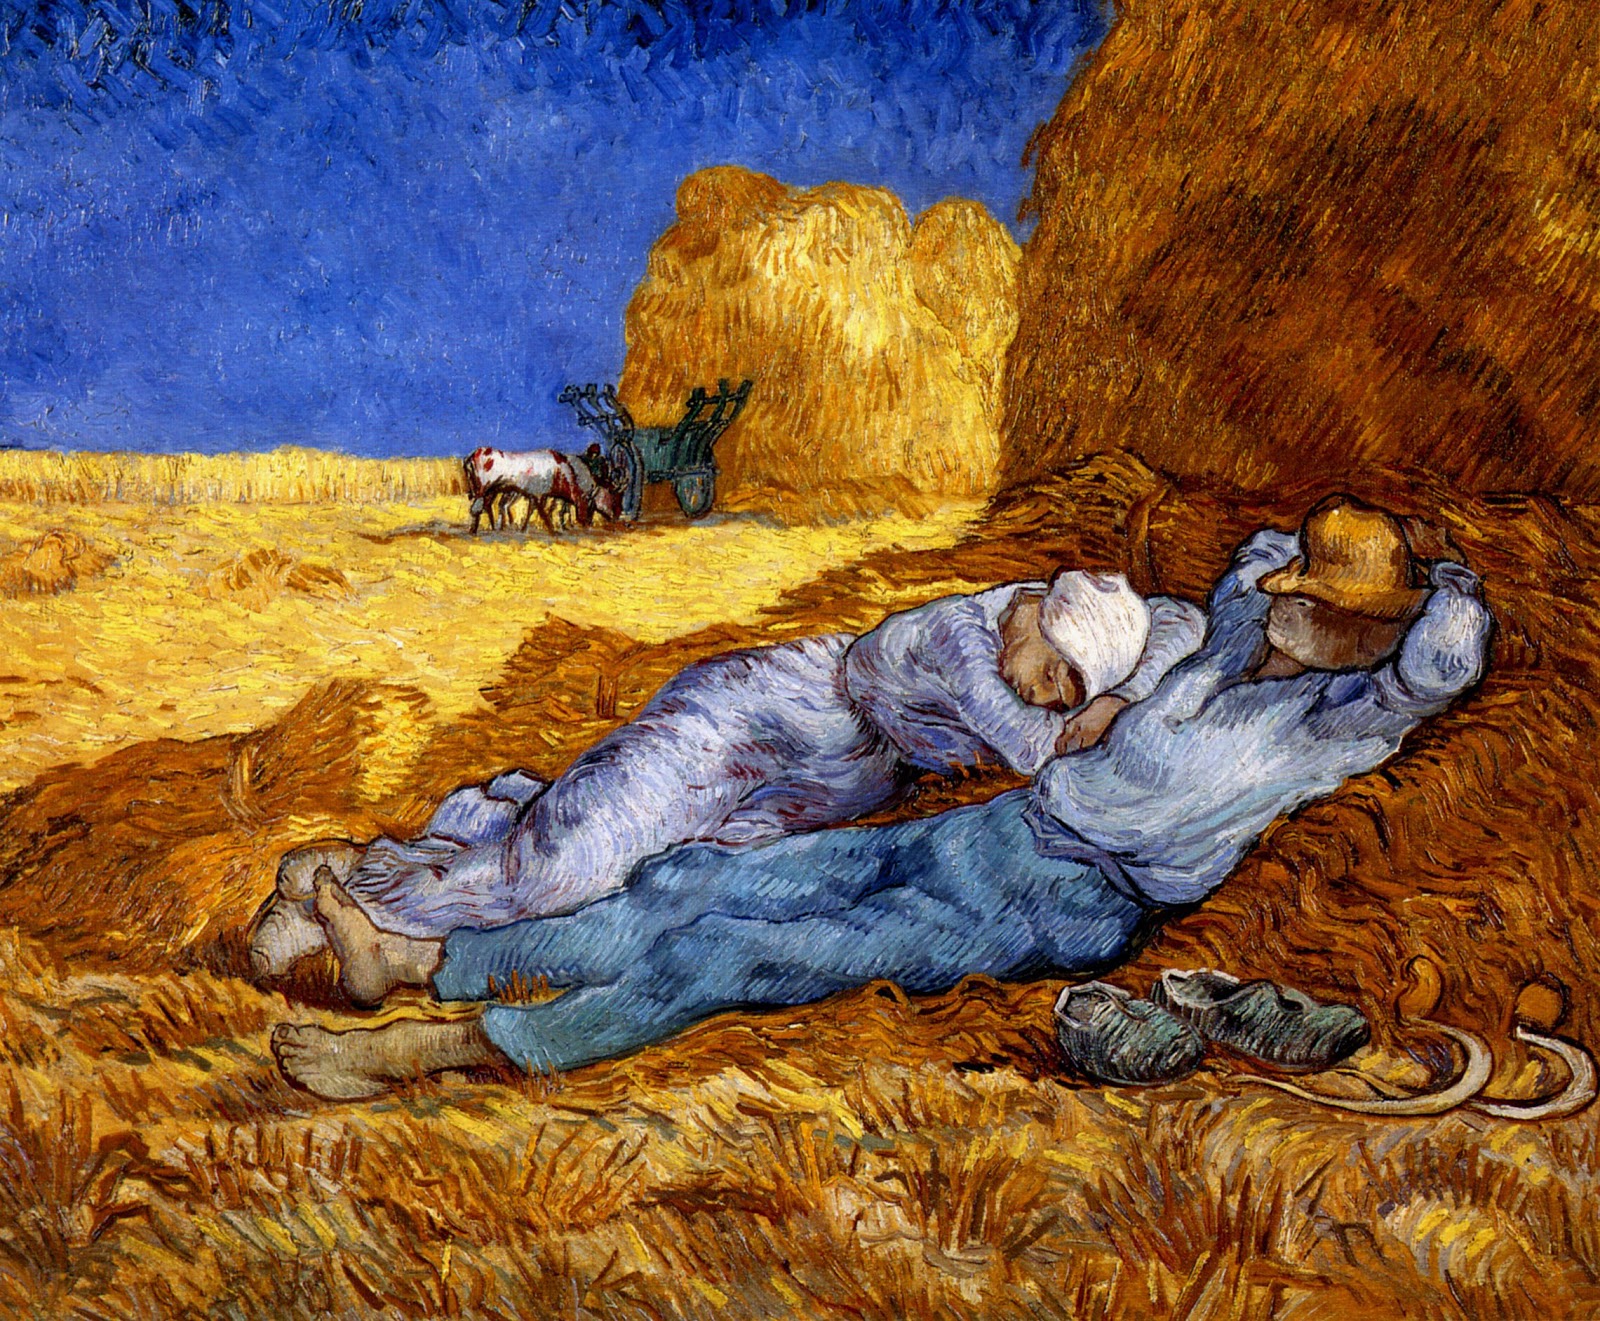 Vincent+Van+Gogh-1853-1890 (789).jpg